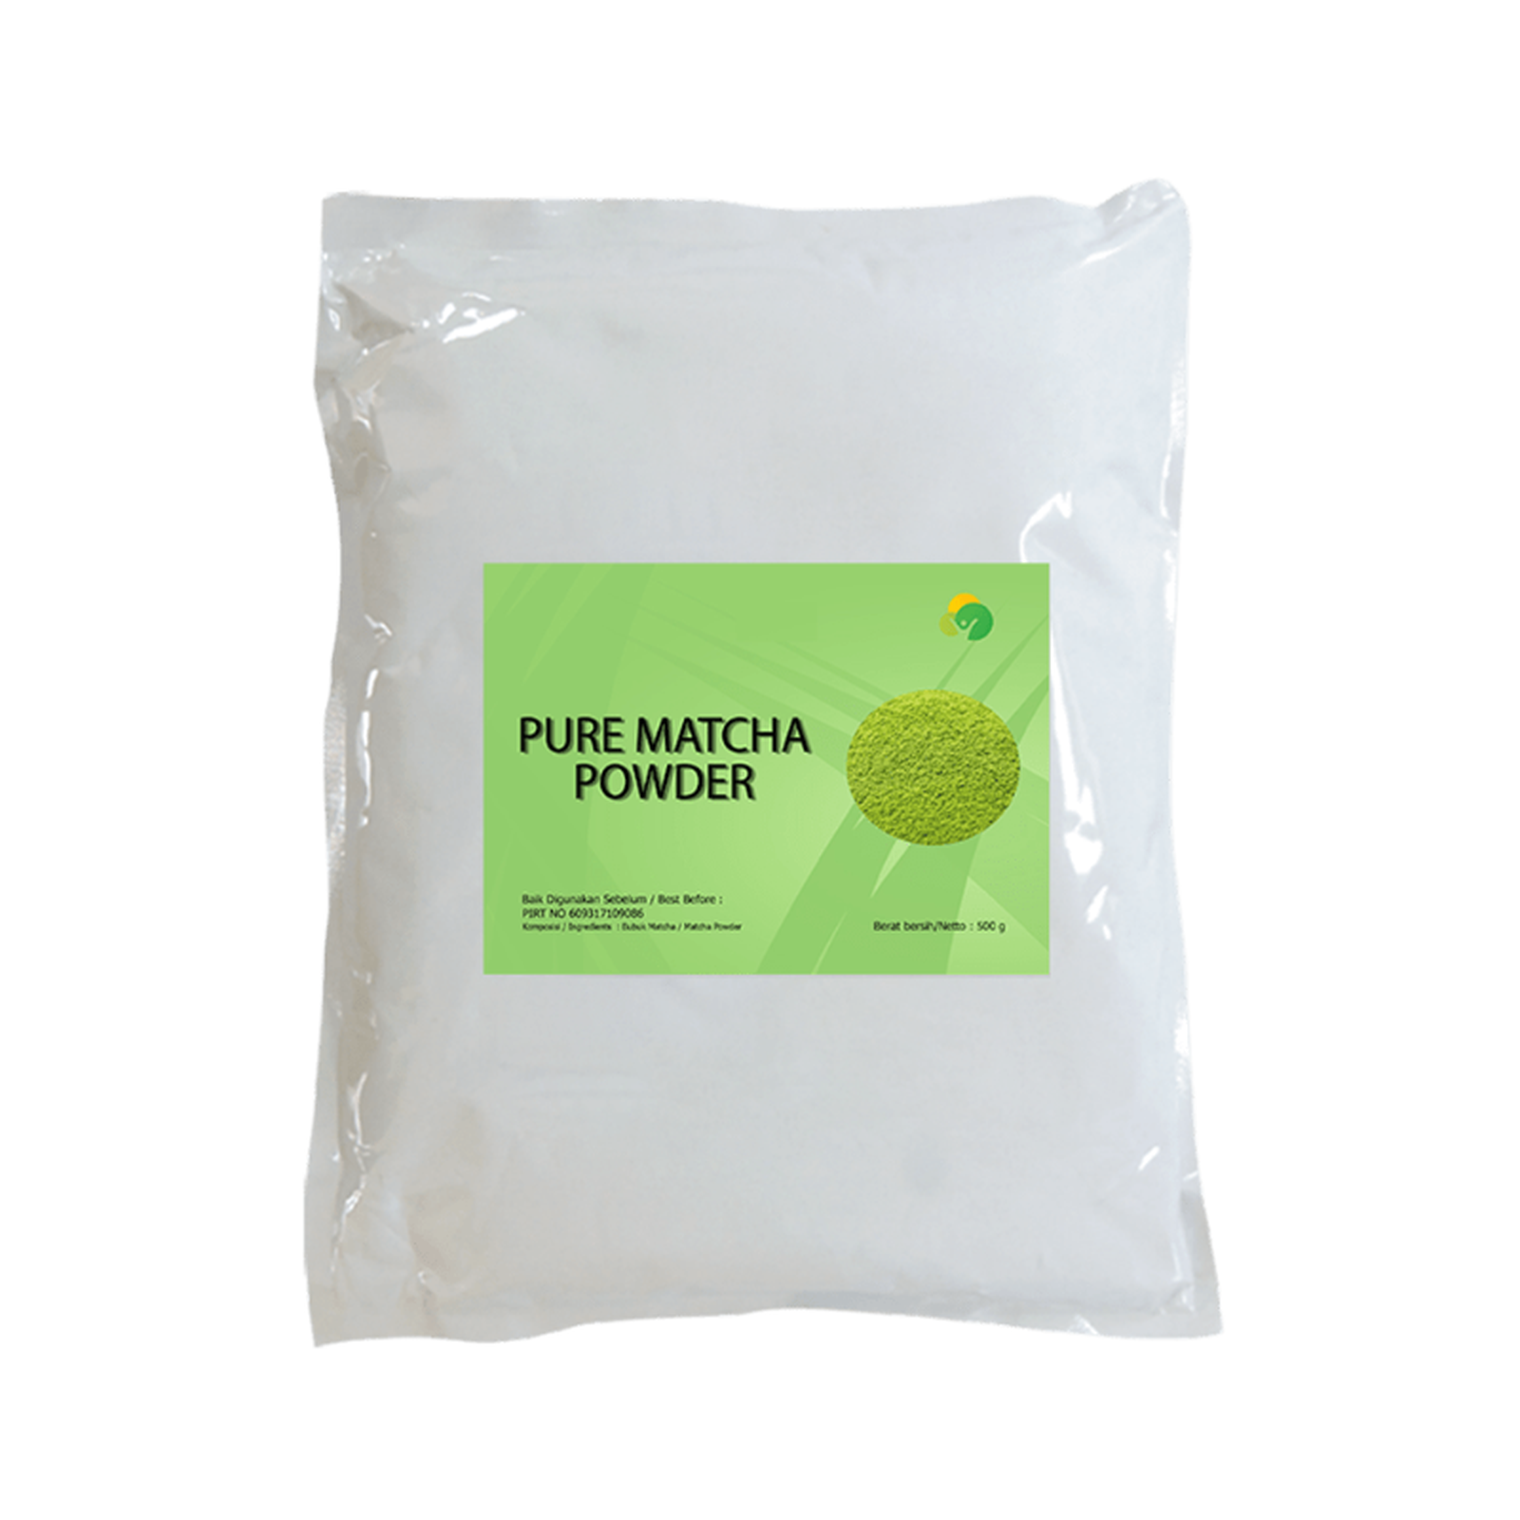 Pure Matcha Powder main image